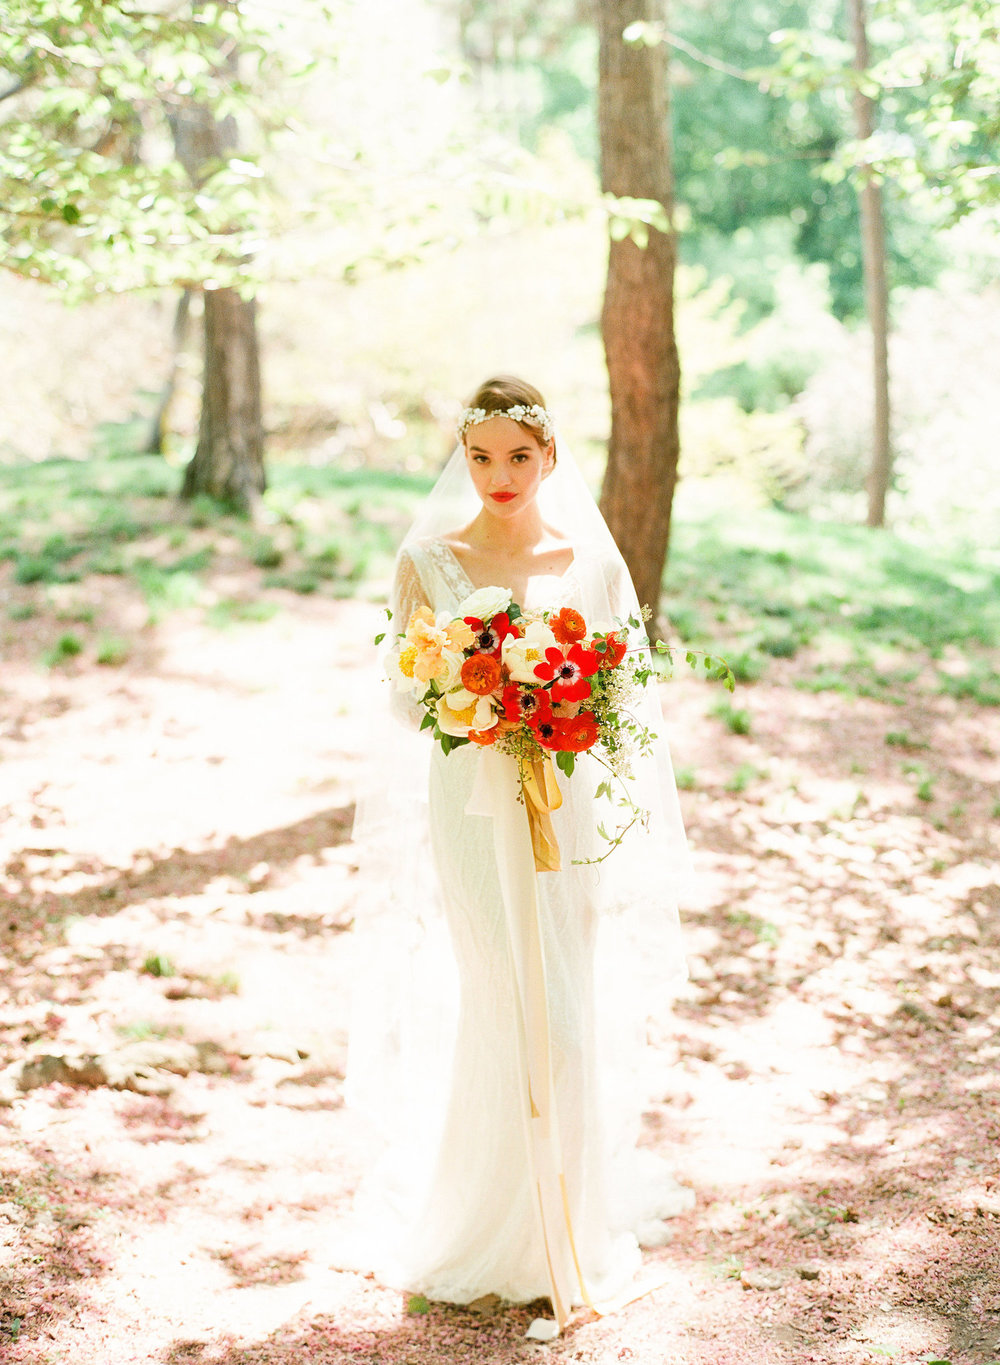 Morning Glow - Full Aperture Floral & Lindsay Madden Photography 10.jpeg